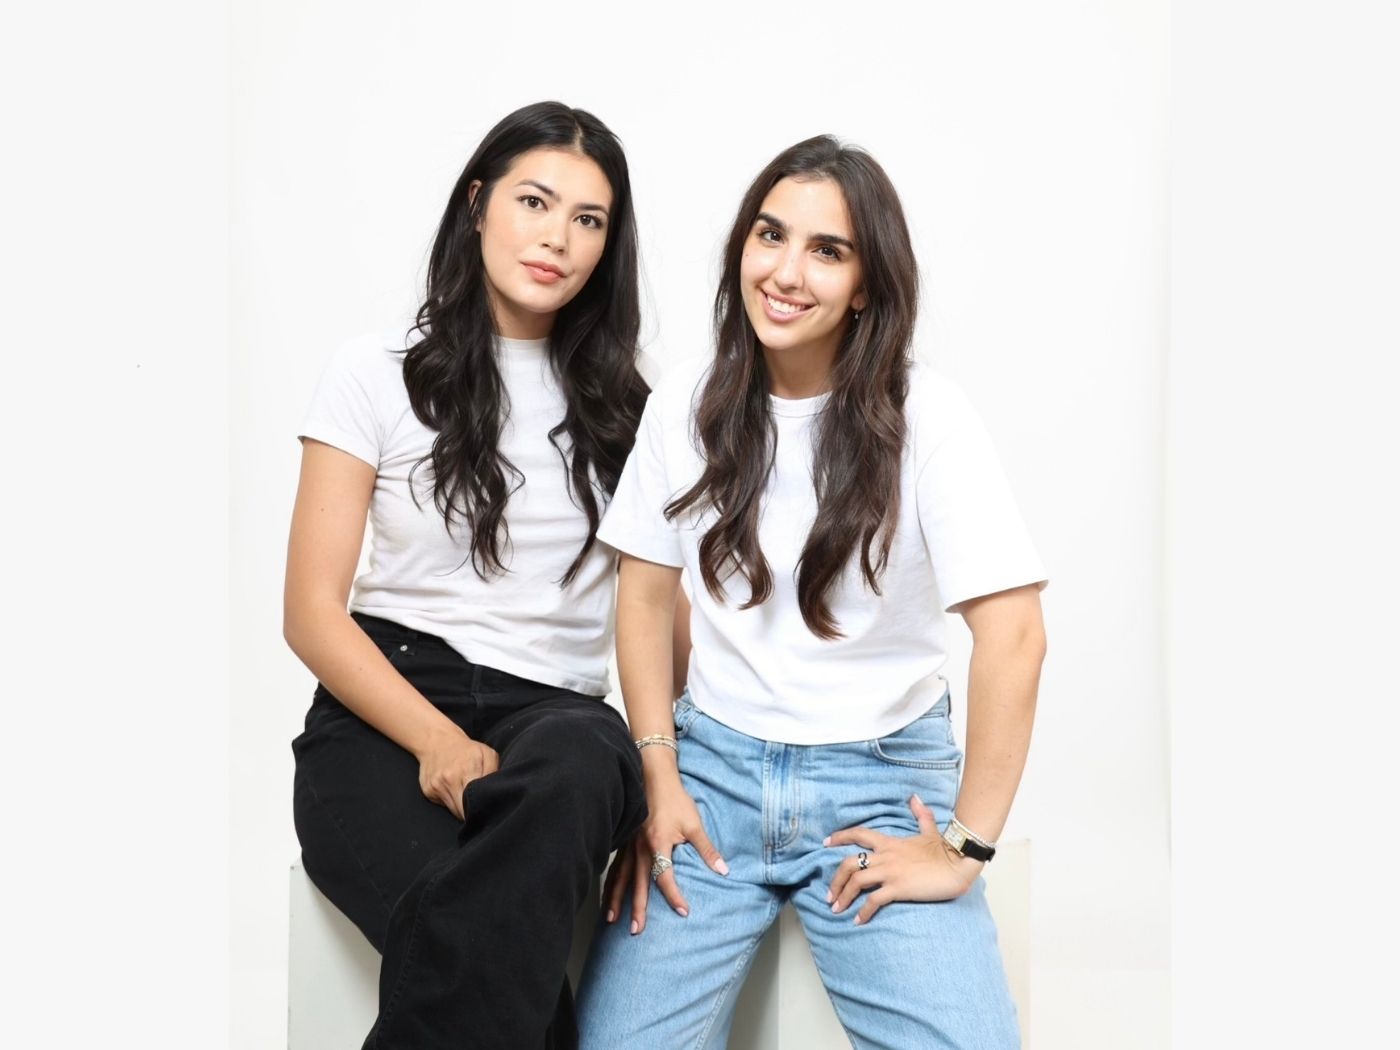 The founders of 4AM Skincare, Jade Beguelin And Sabrina Sade.